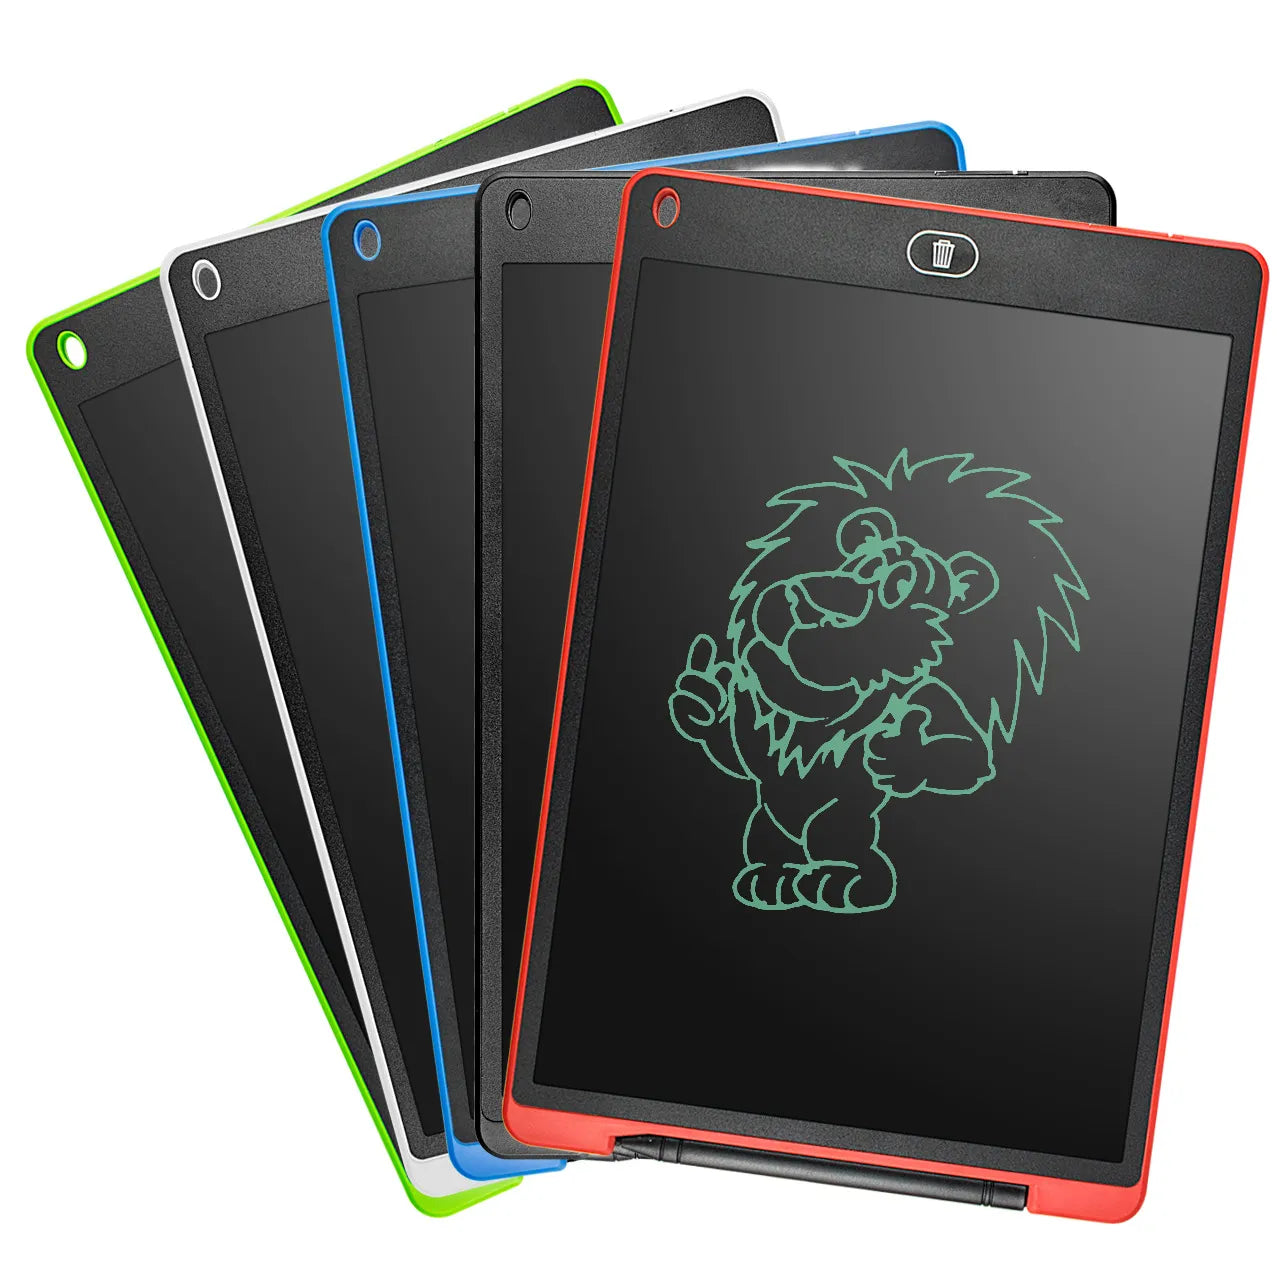 ColorSketch - Tela de LCD para Desenhos Mágicos